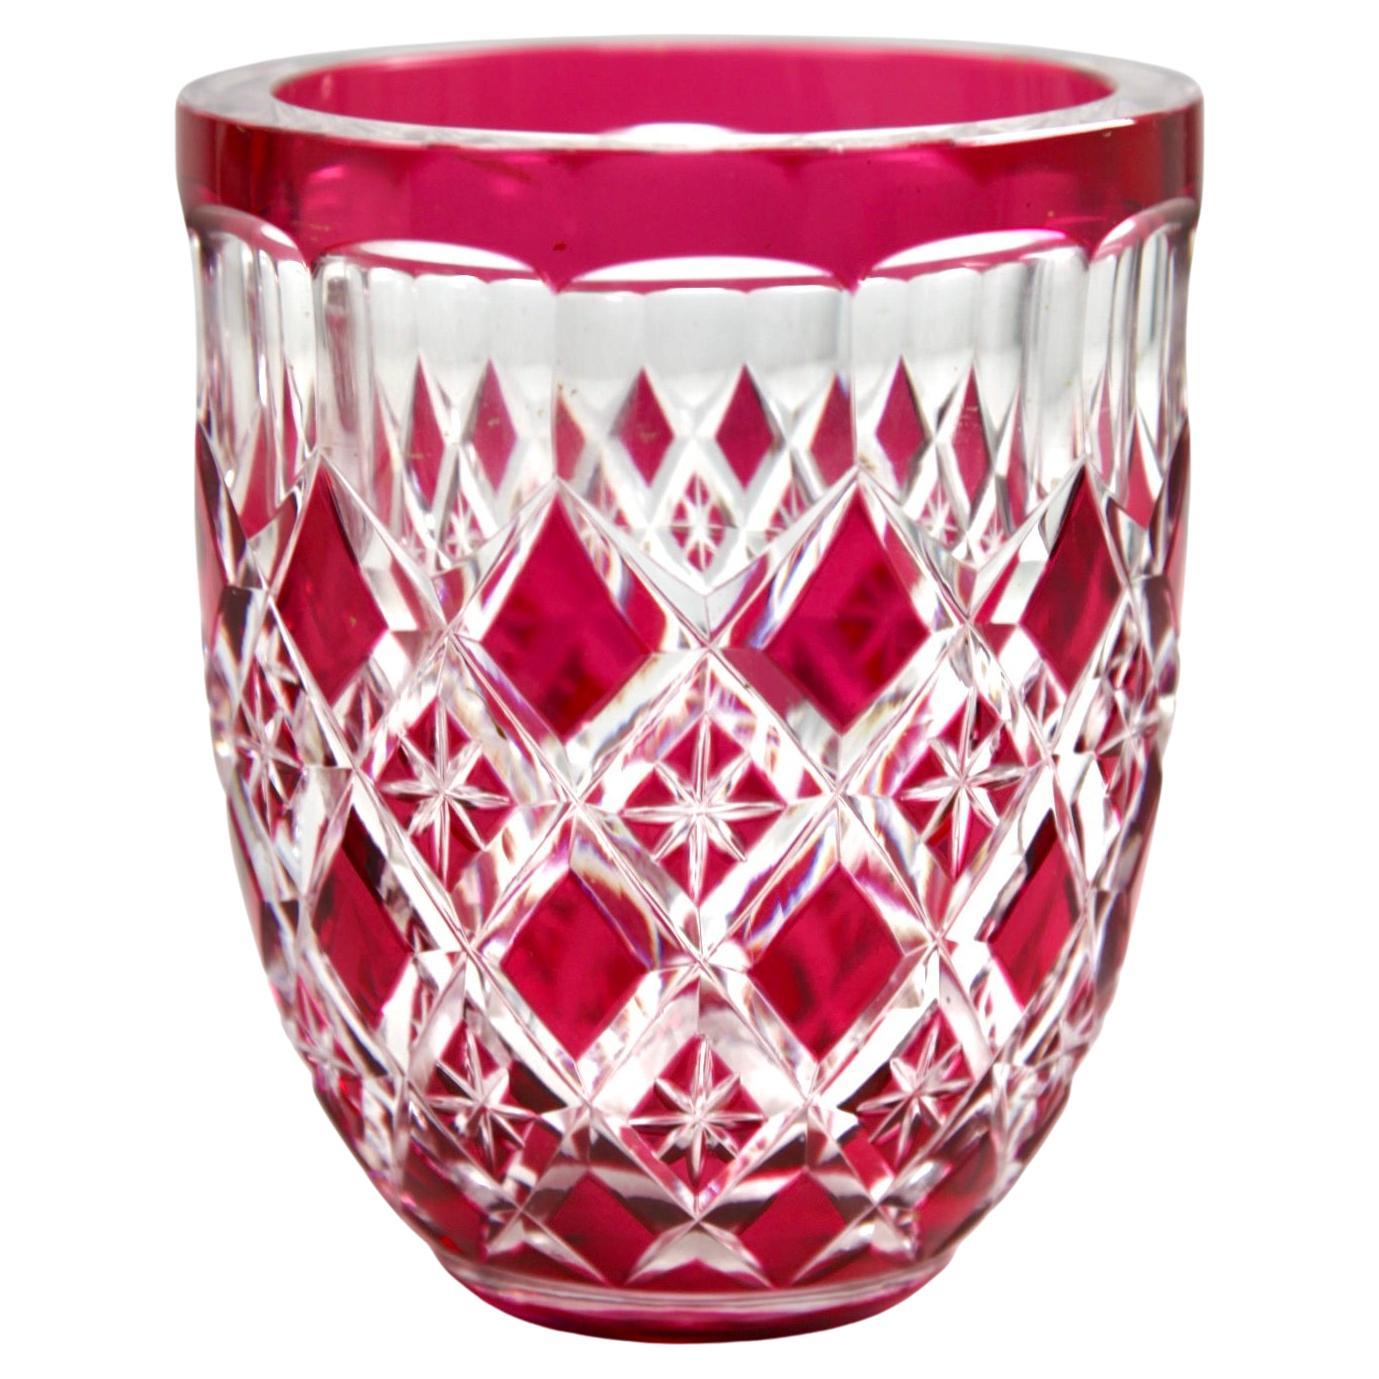 Art Deco Val Saint Lambert Crystal Vase Cut to Clear